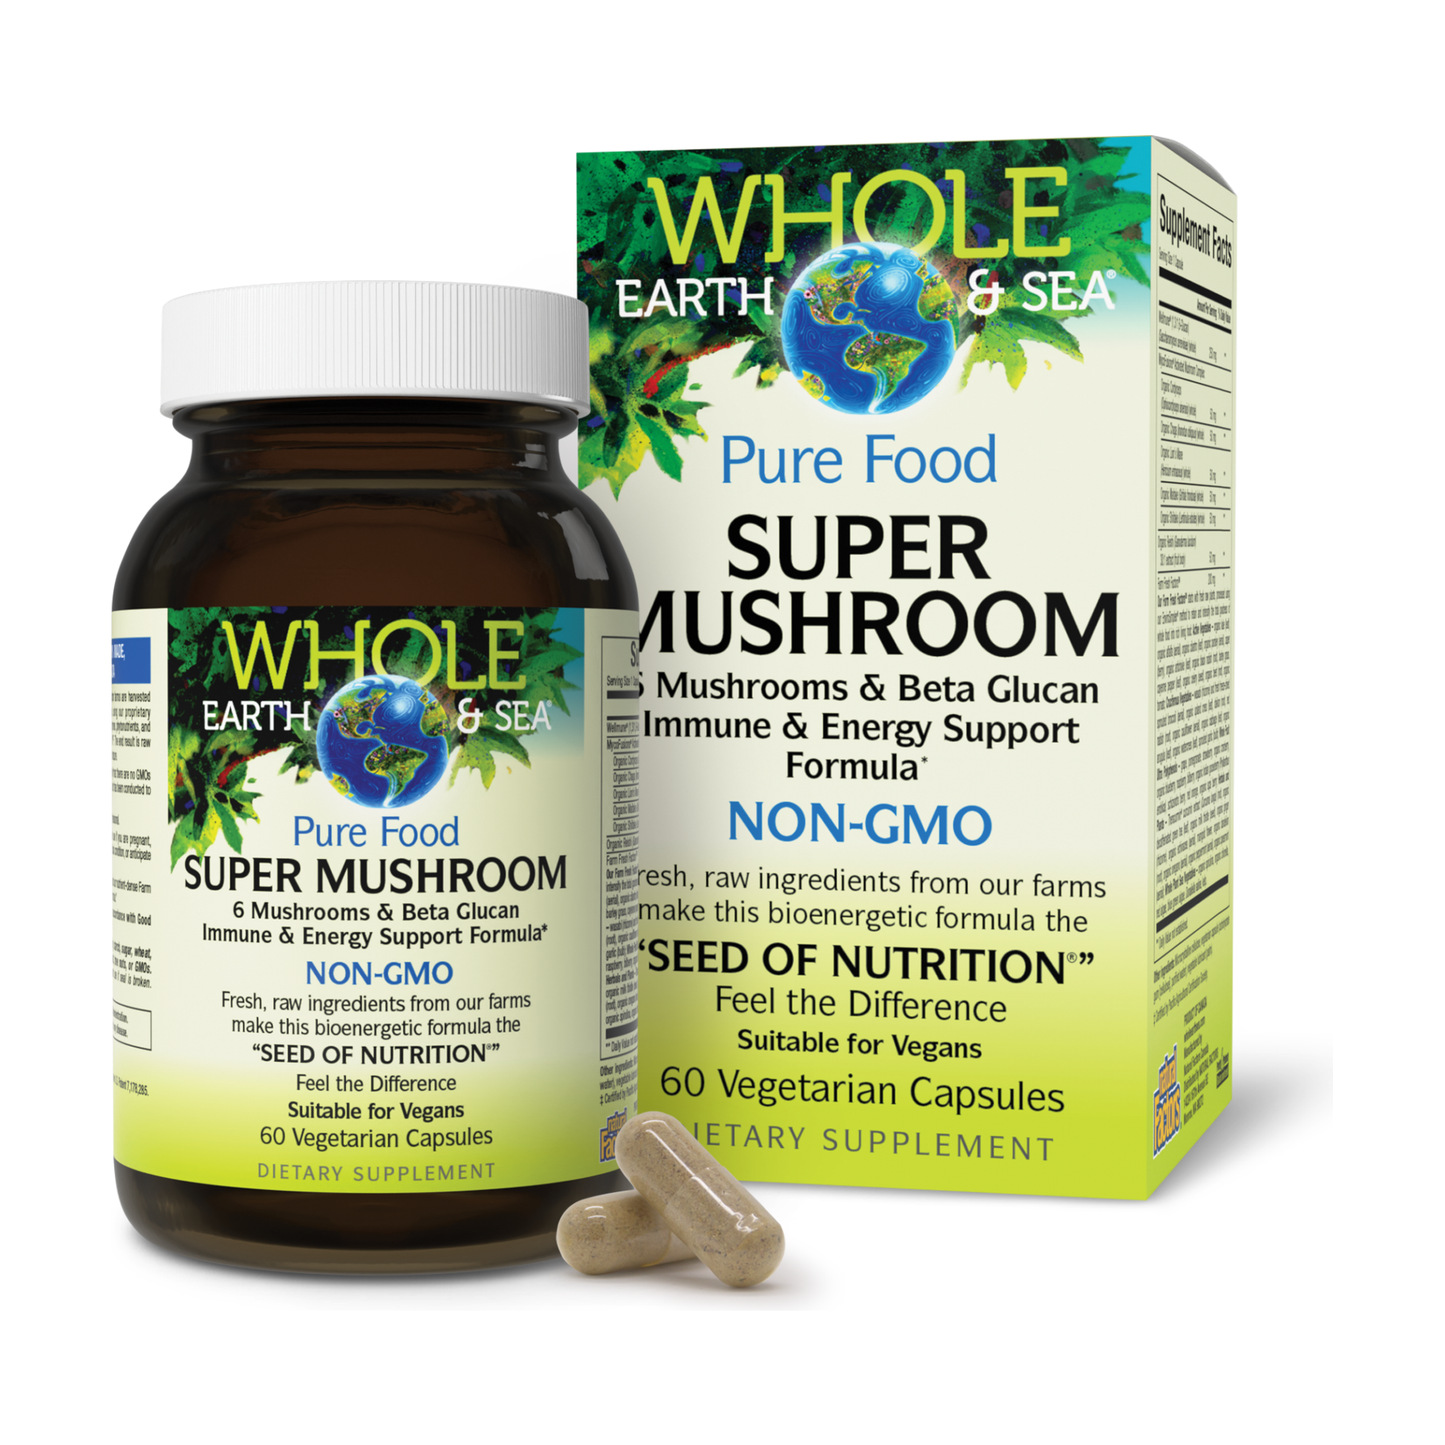 Super Mushroom for Whole Earth & Sea® |variant|hi-res|35510U